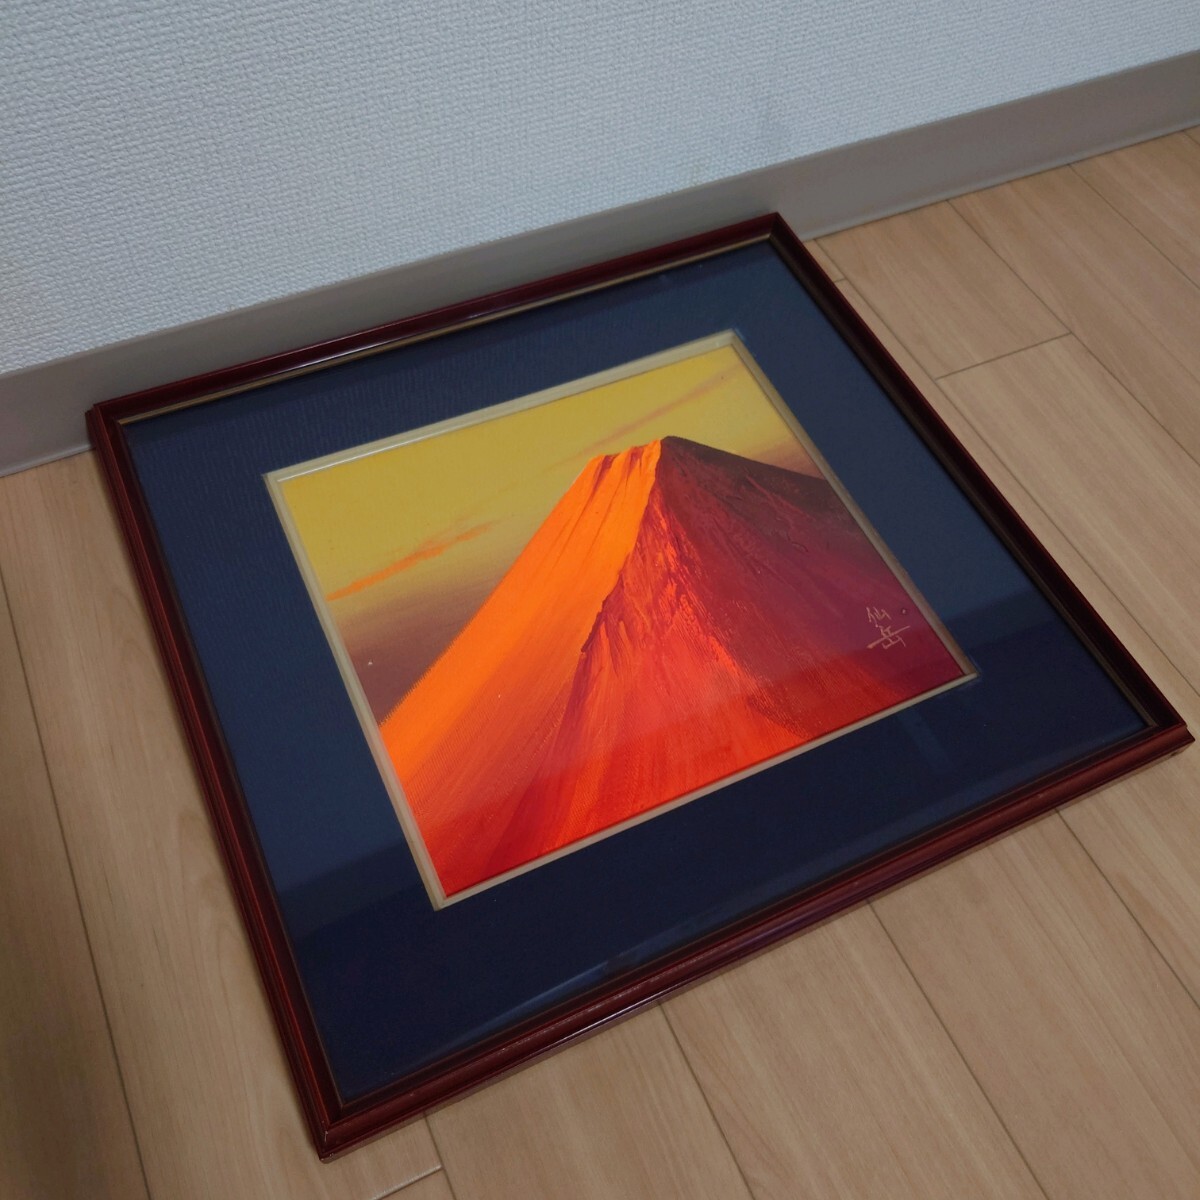 Ab 1 Yen Mt. Sengaku Mt. Fuji Ölgemälde Kunstmalerei Landschaftsmalerei Roter Mt. Fuji Gerahmte japanische Malerei, Malerei, Ölgemälde, Natur, Landschaftsmalerei